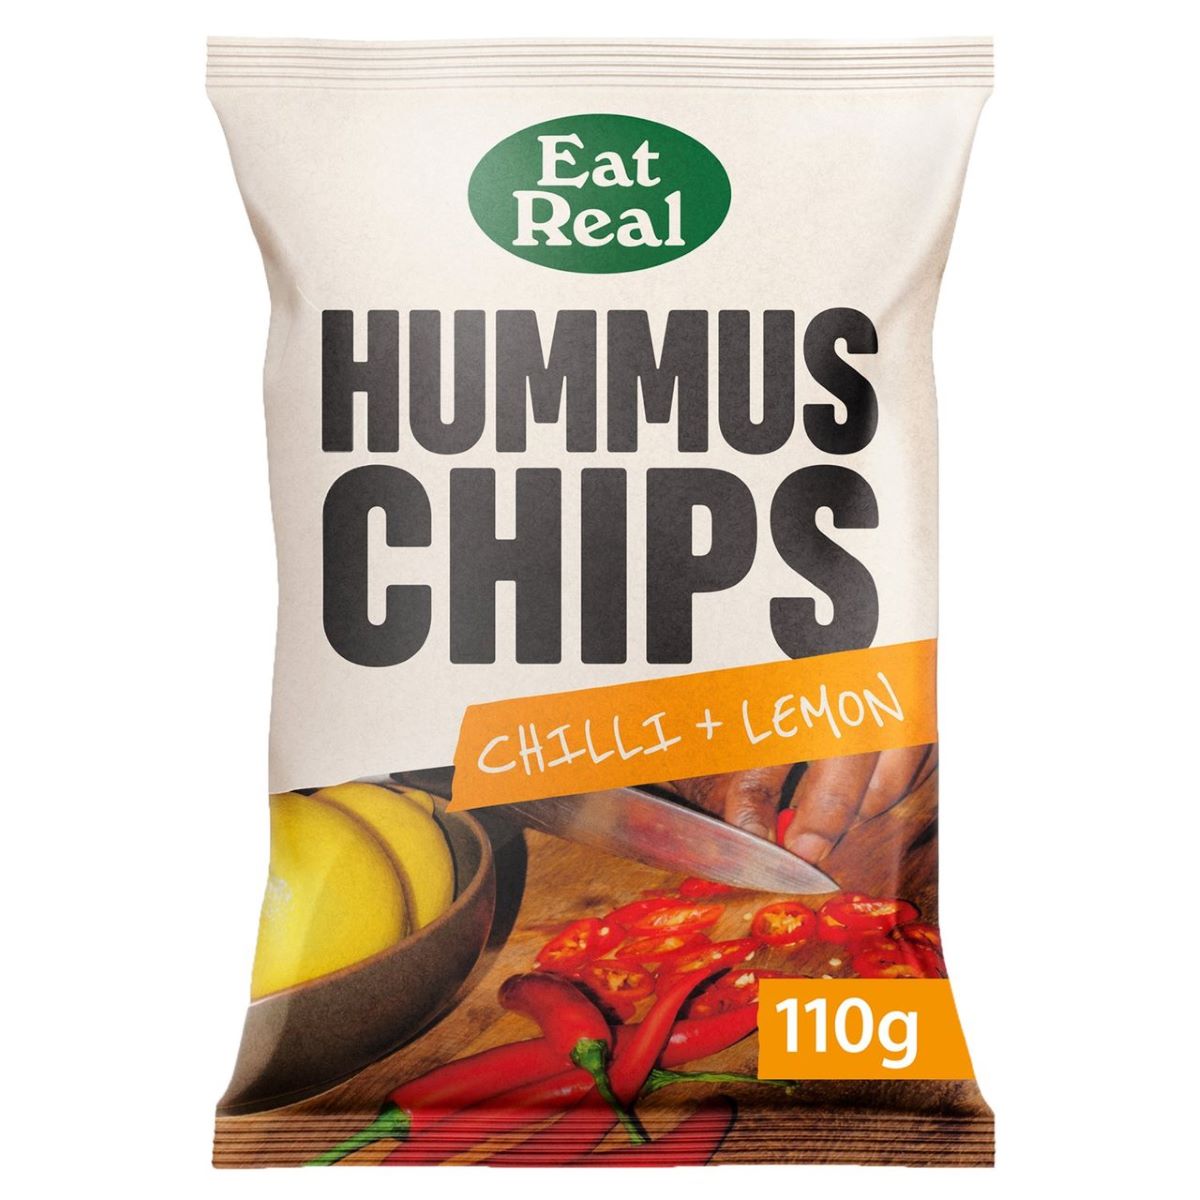 Eat Real Hummus Chilli & Lemon Chips 110g